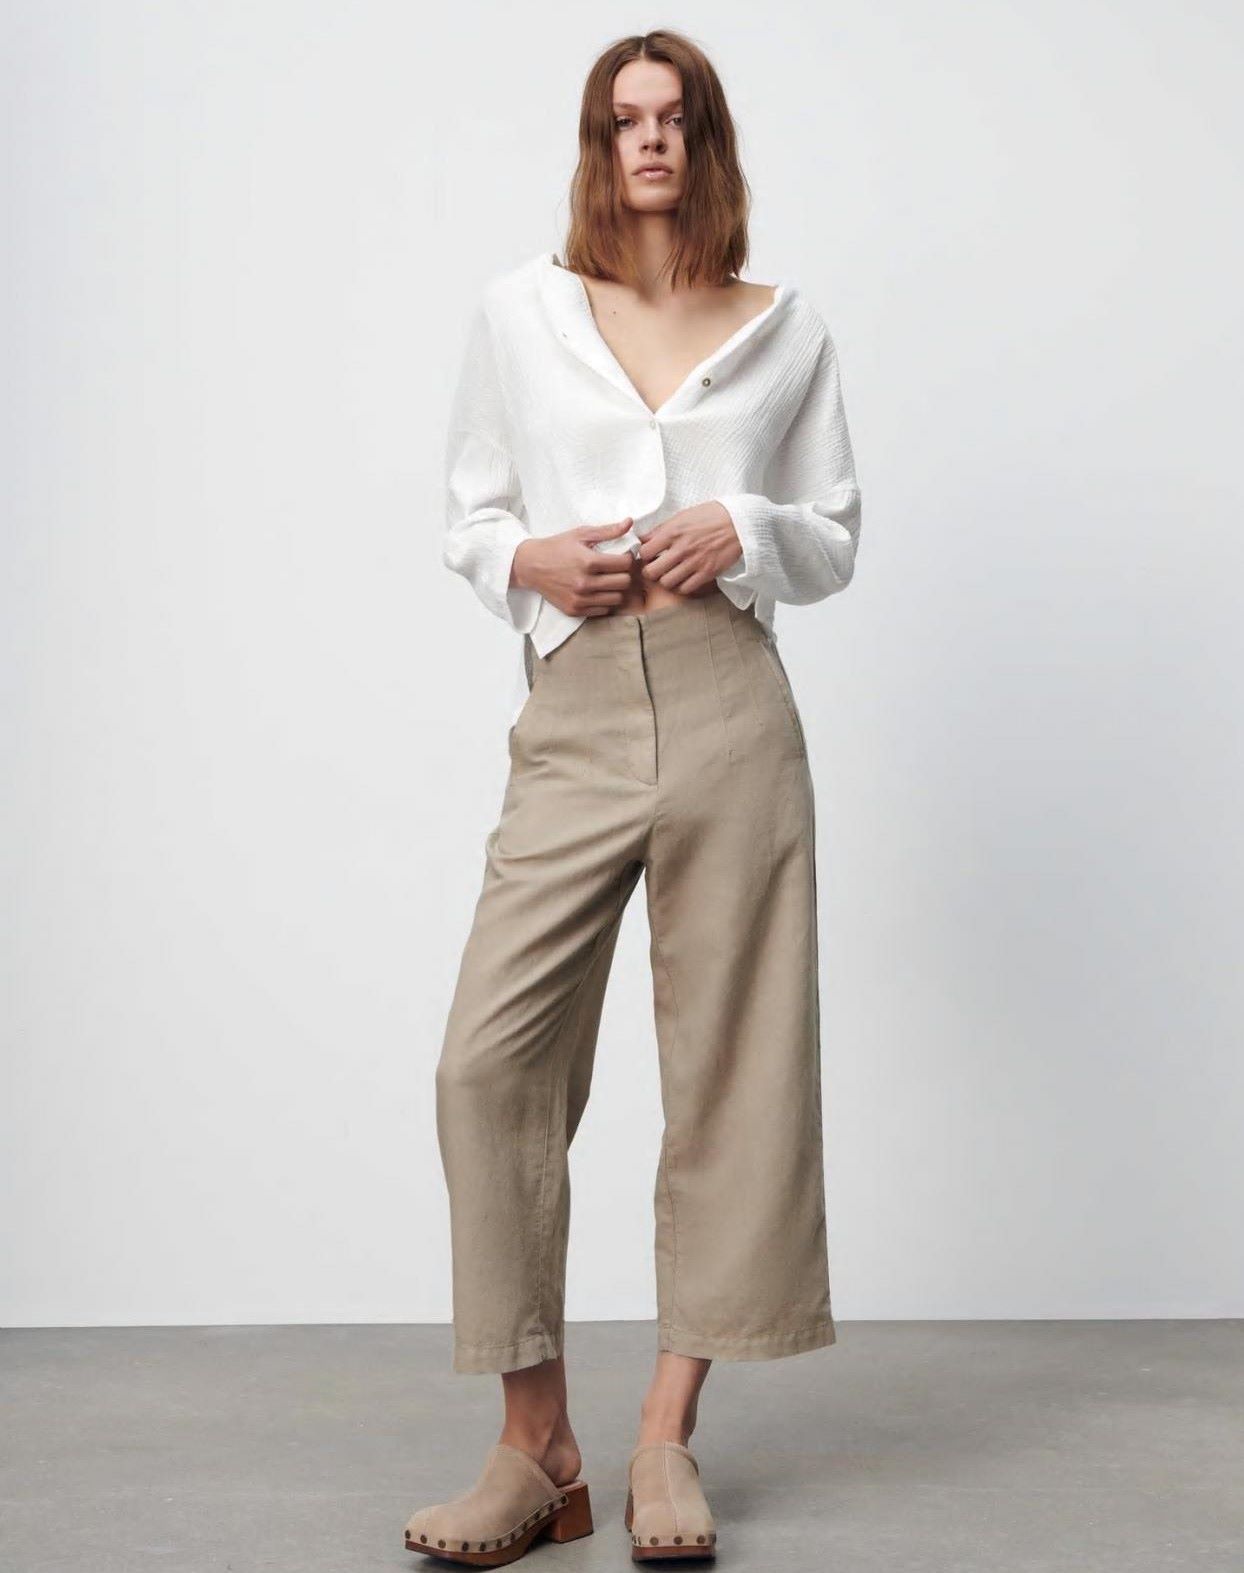 Le pantalon ultra-tendance Printemps/hiver vendu par Zara et Mango !